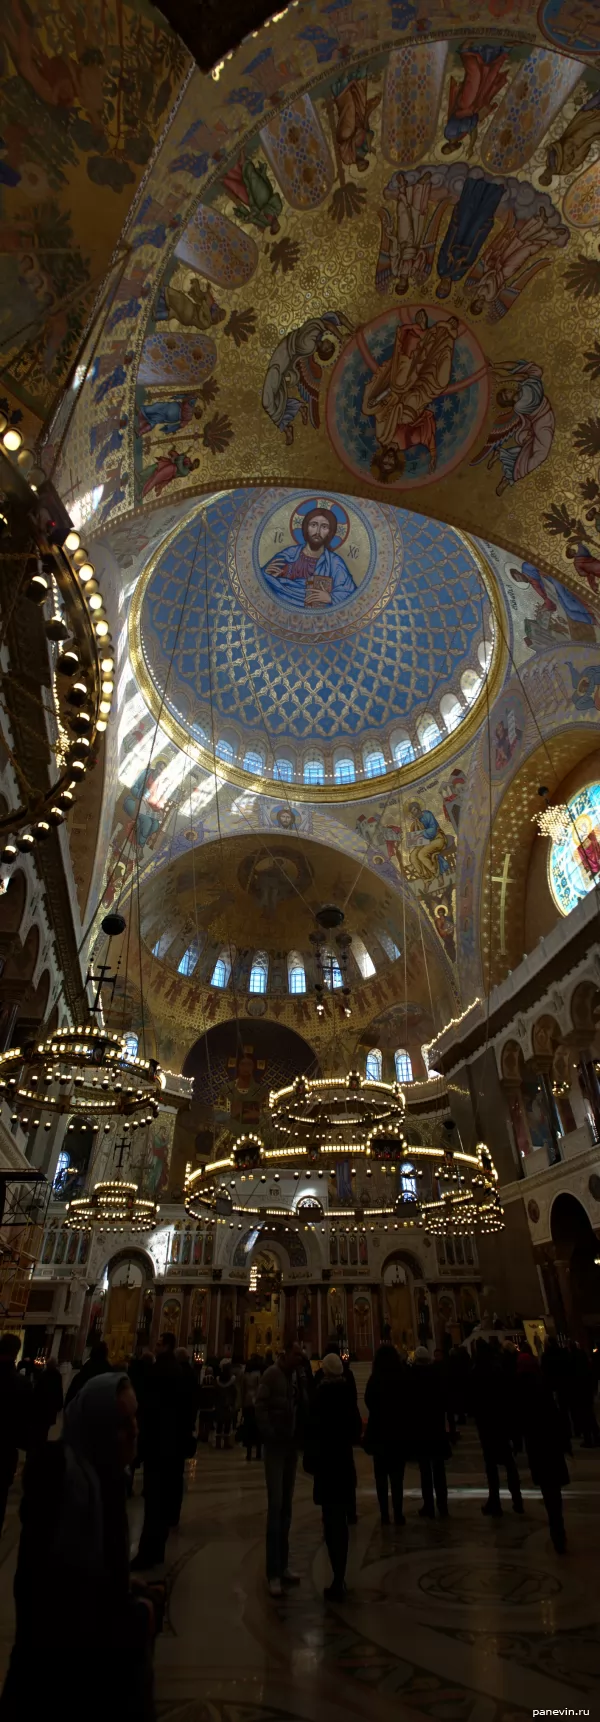 Внутри Кронштадтского Морского собора, роспись купола